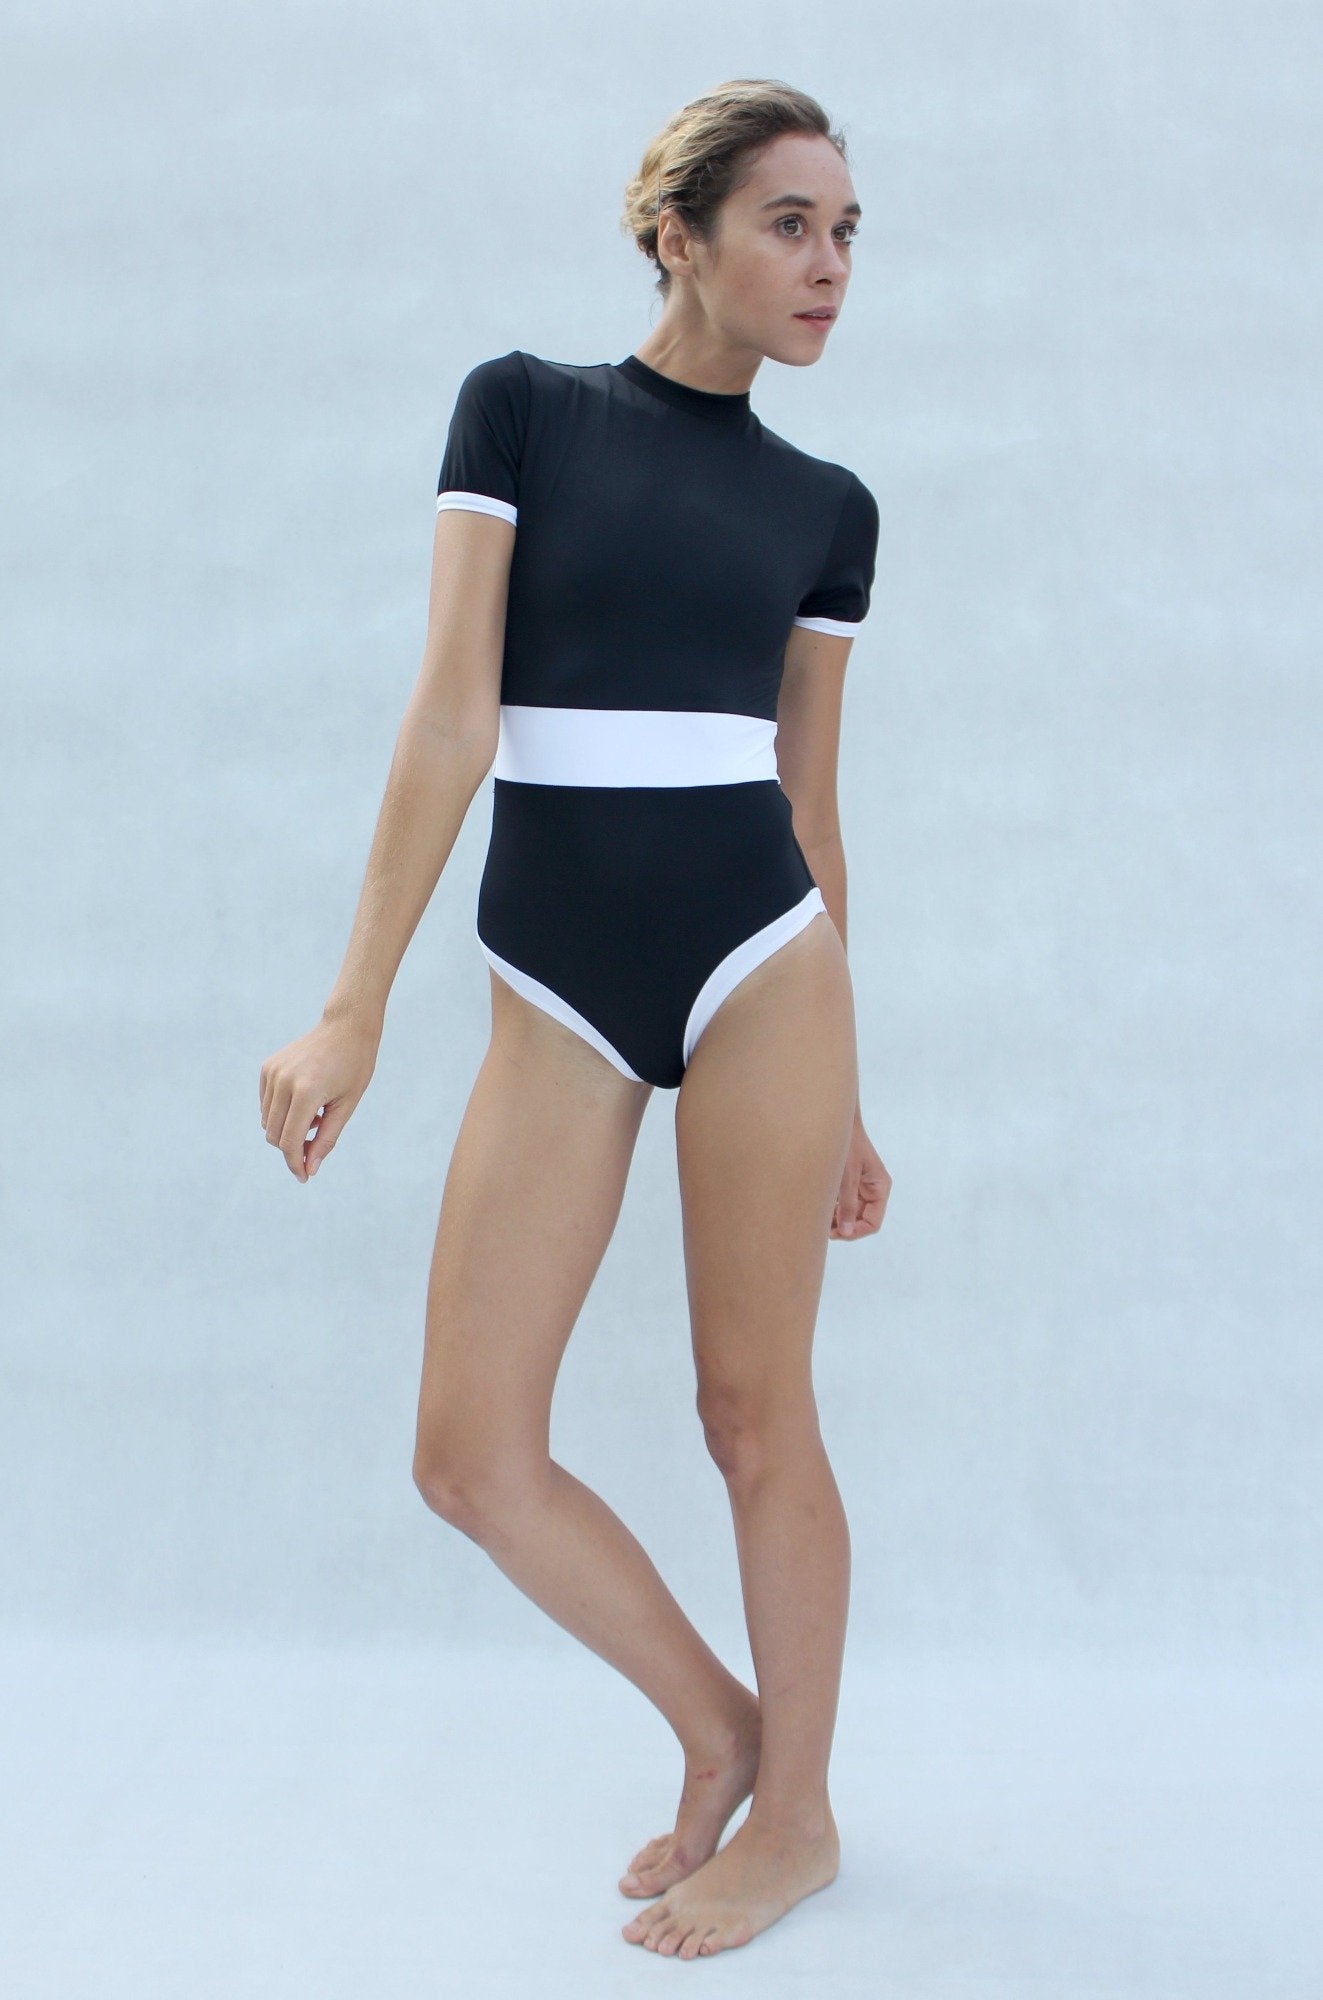 Reef Short Arms One Piece Swimsuit - Makara wear